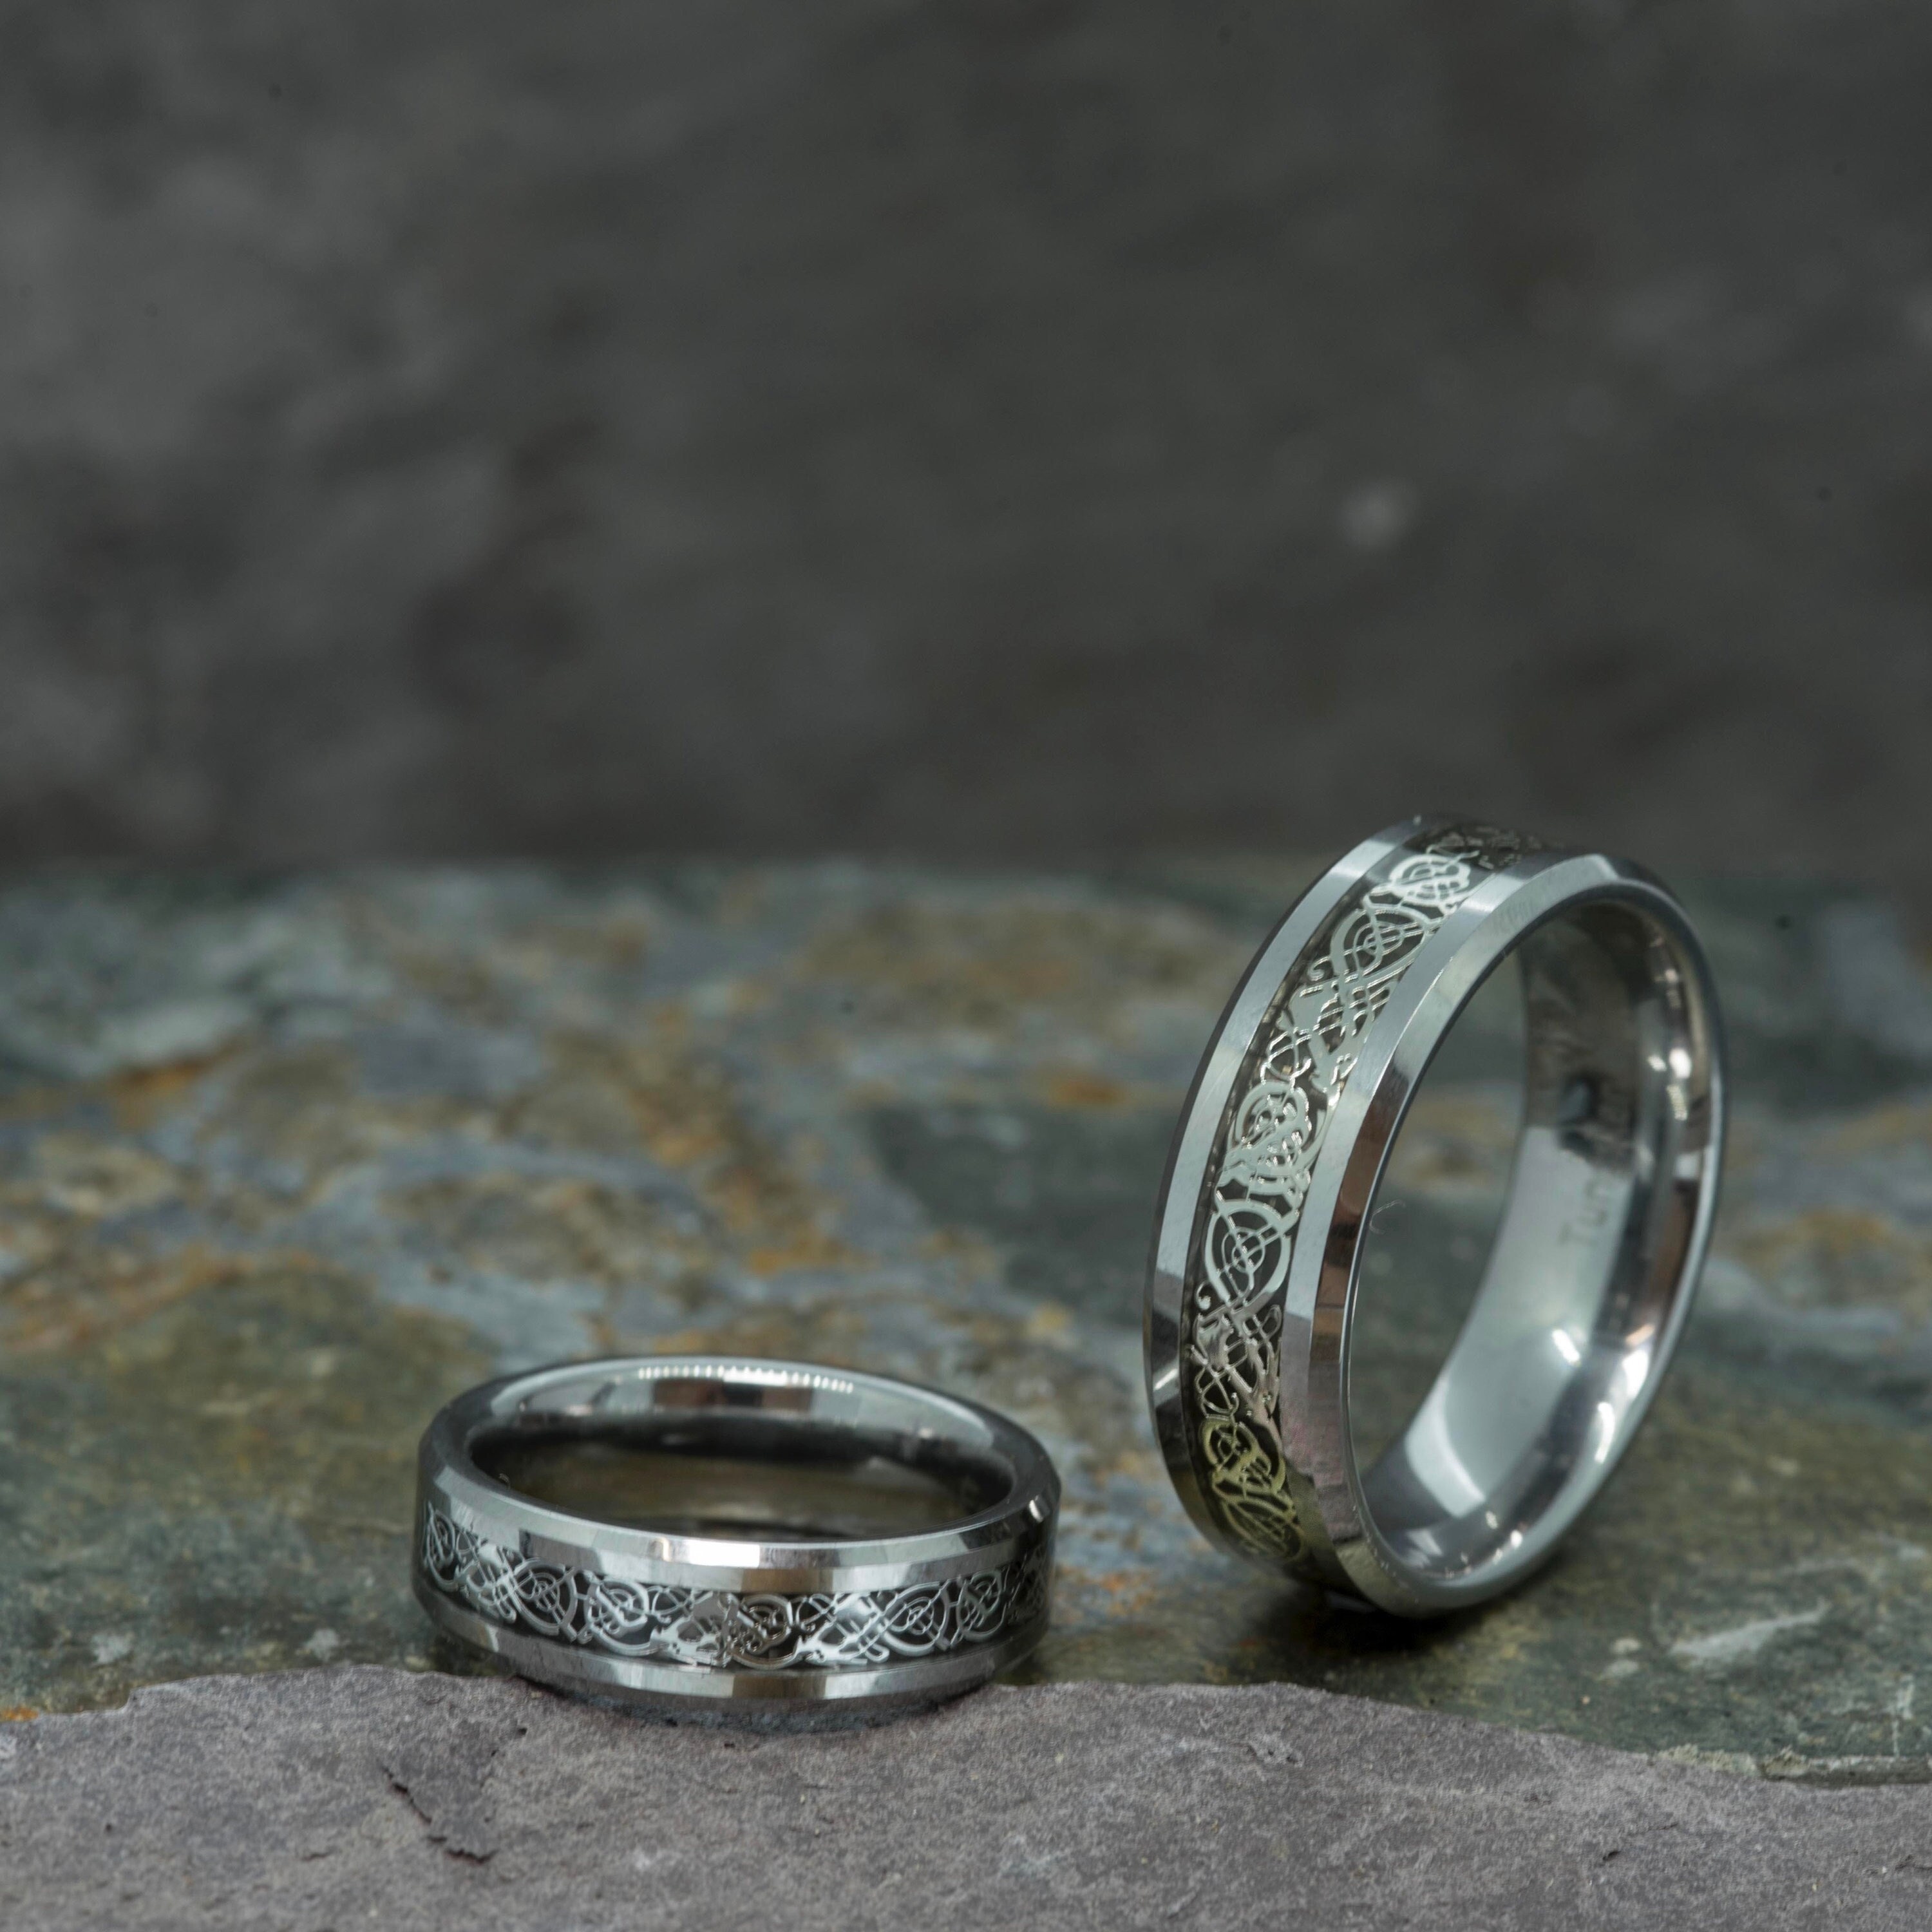 Mens Tungsten Wedding Band Ring Silver Celtic Dragon Black CZ Inlaid Size 6-15 